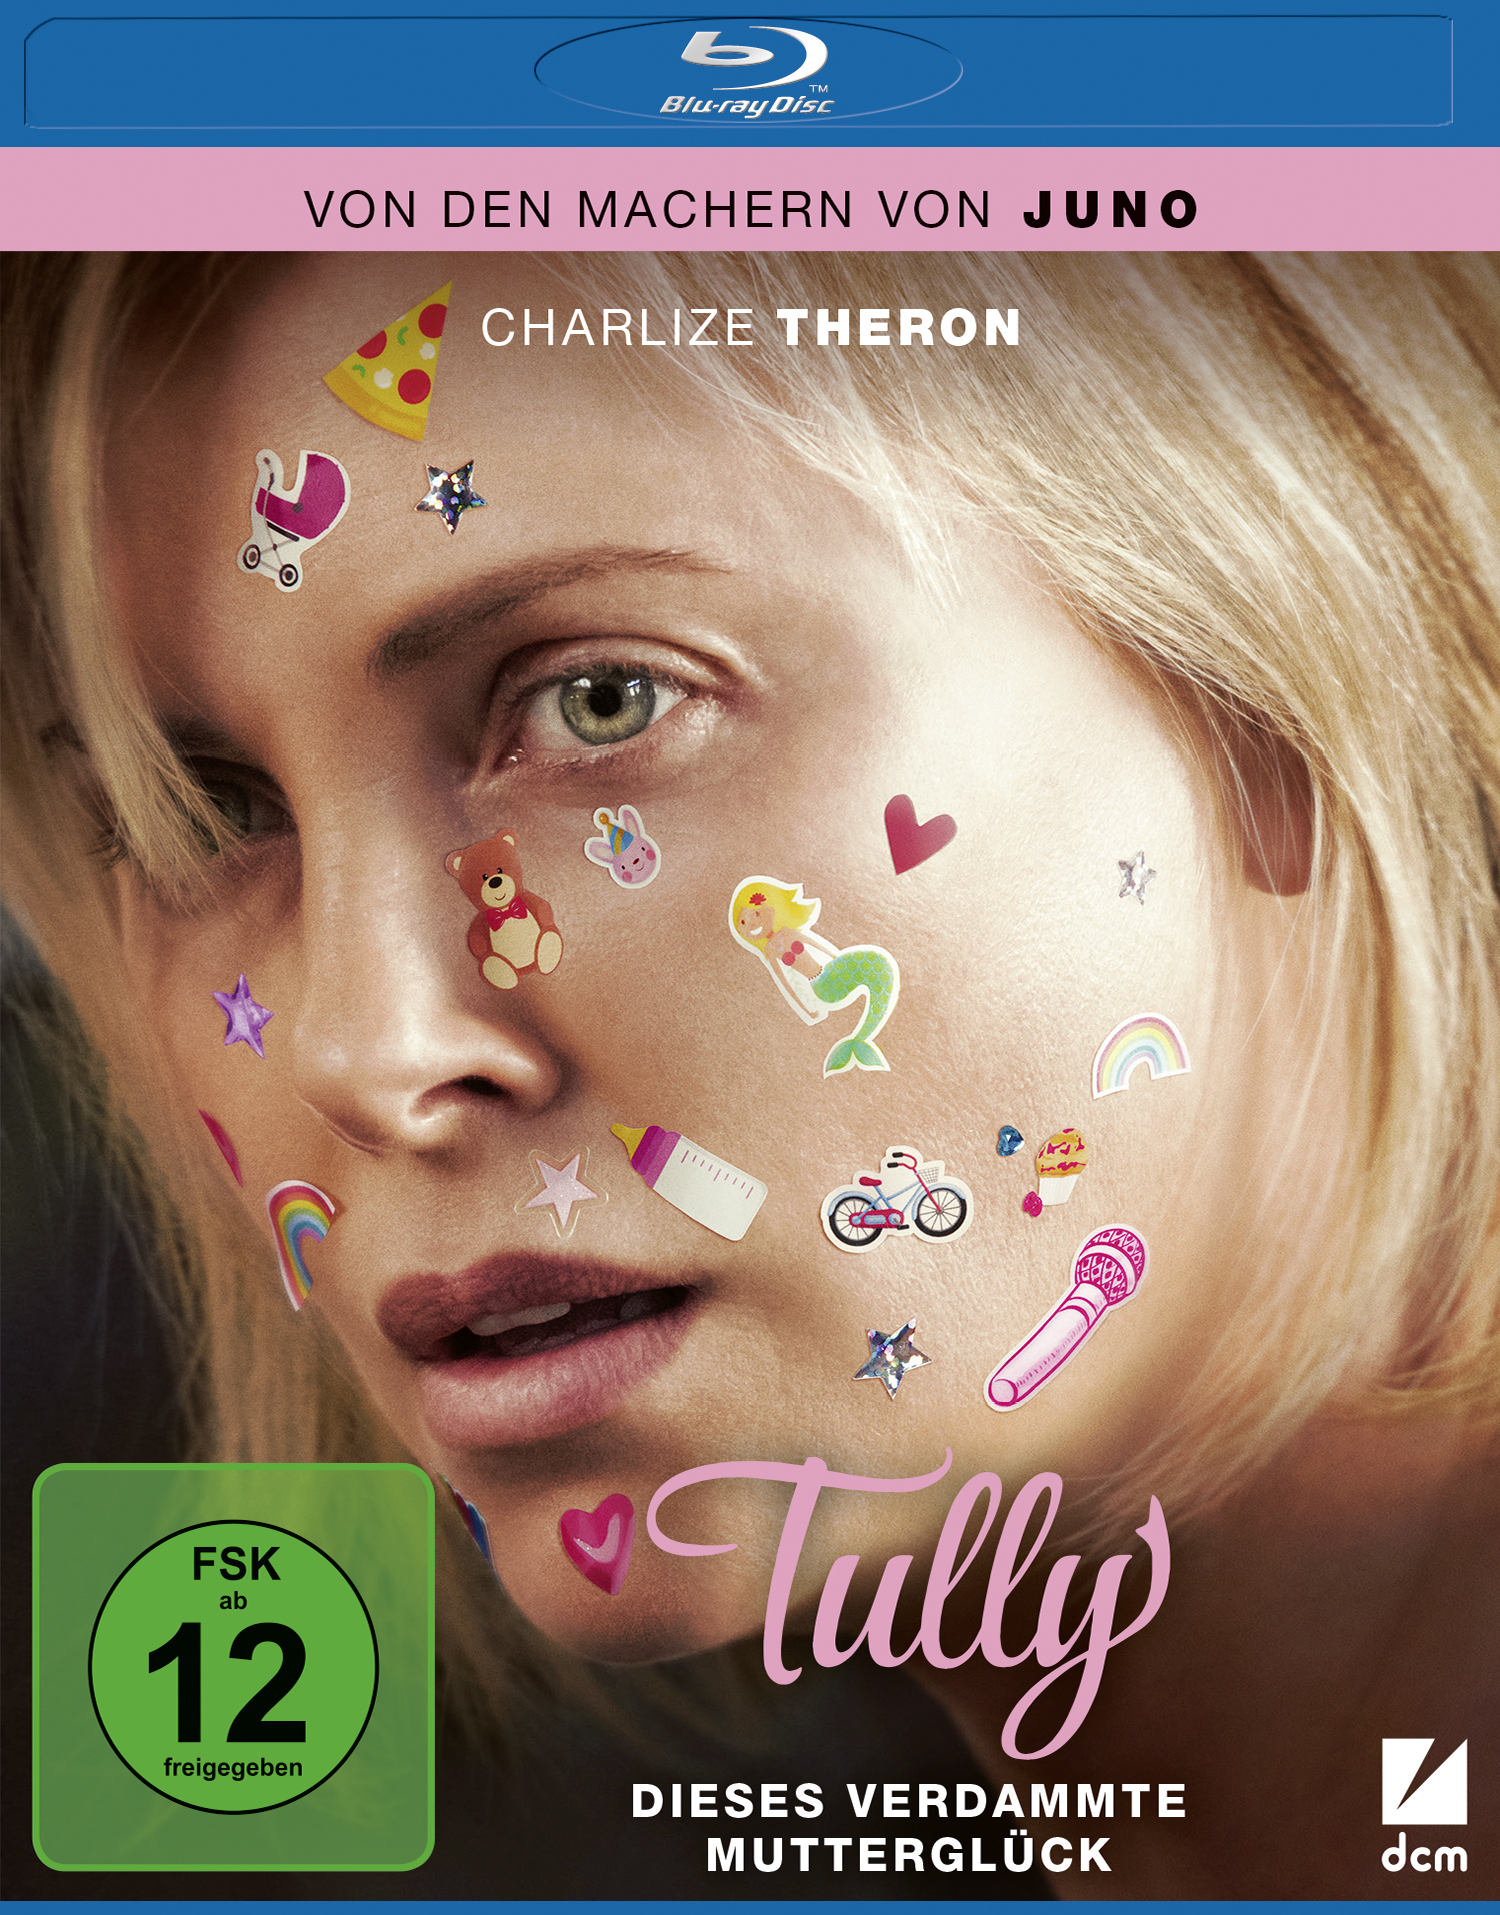 Tully Blu-ray